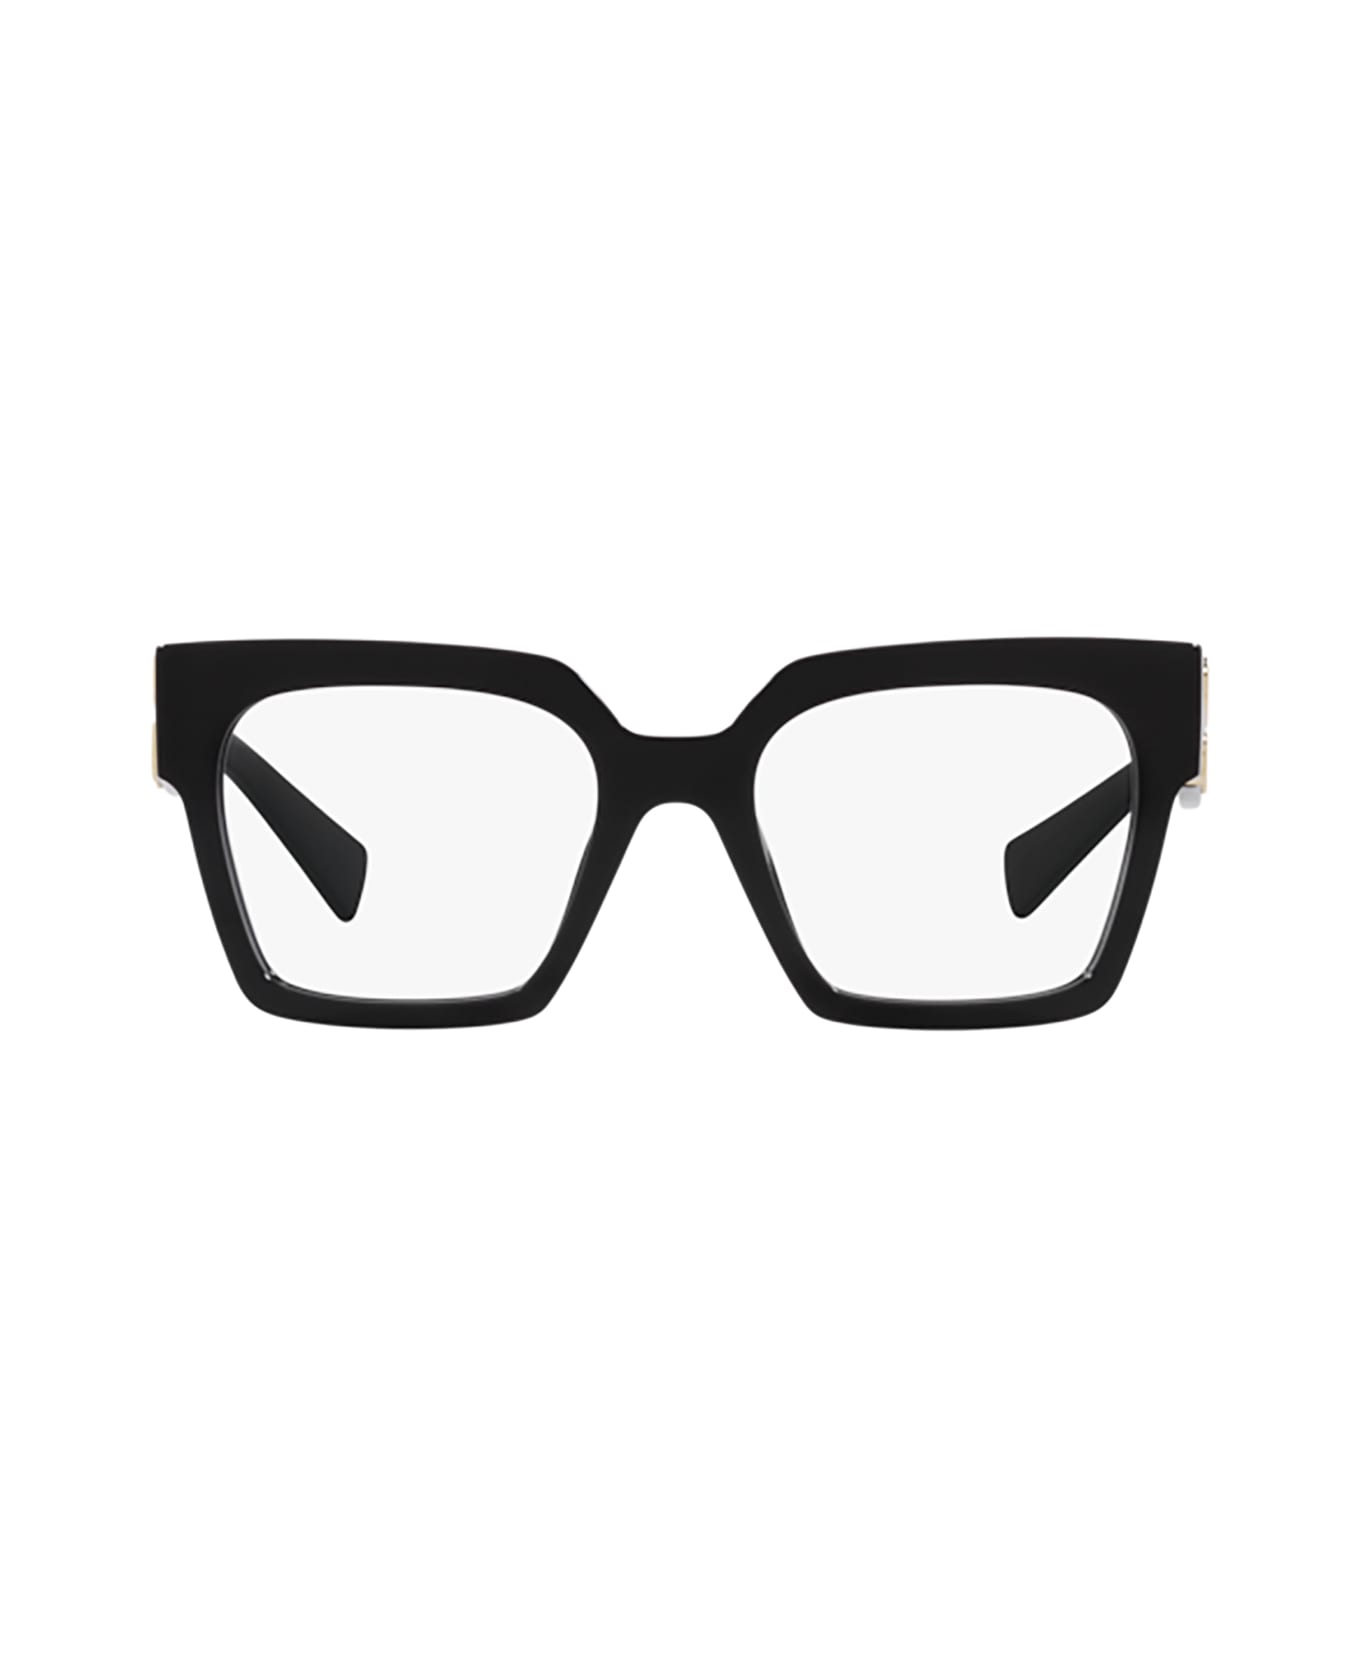 Miu Miu Eyewear Mu 04uv Black Glasses - Black